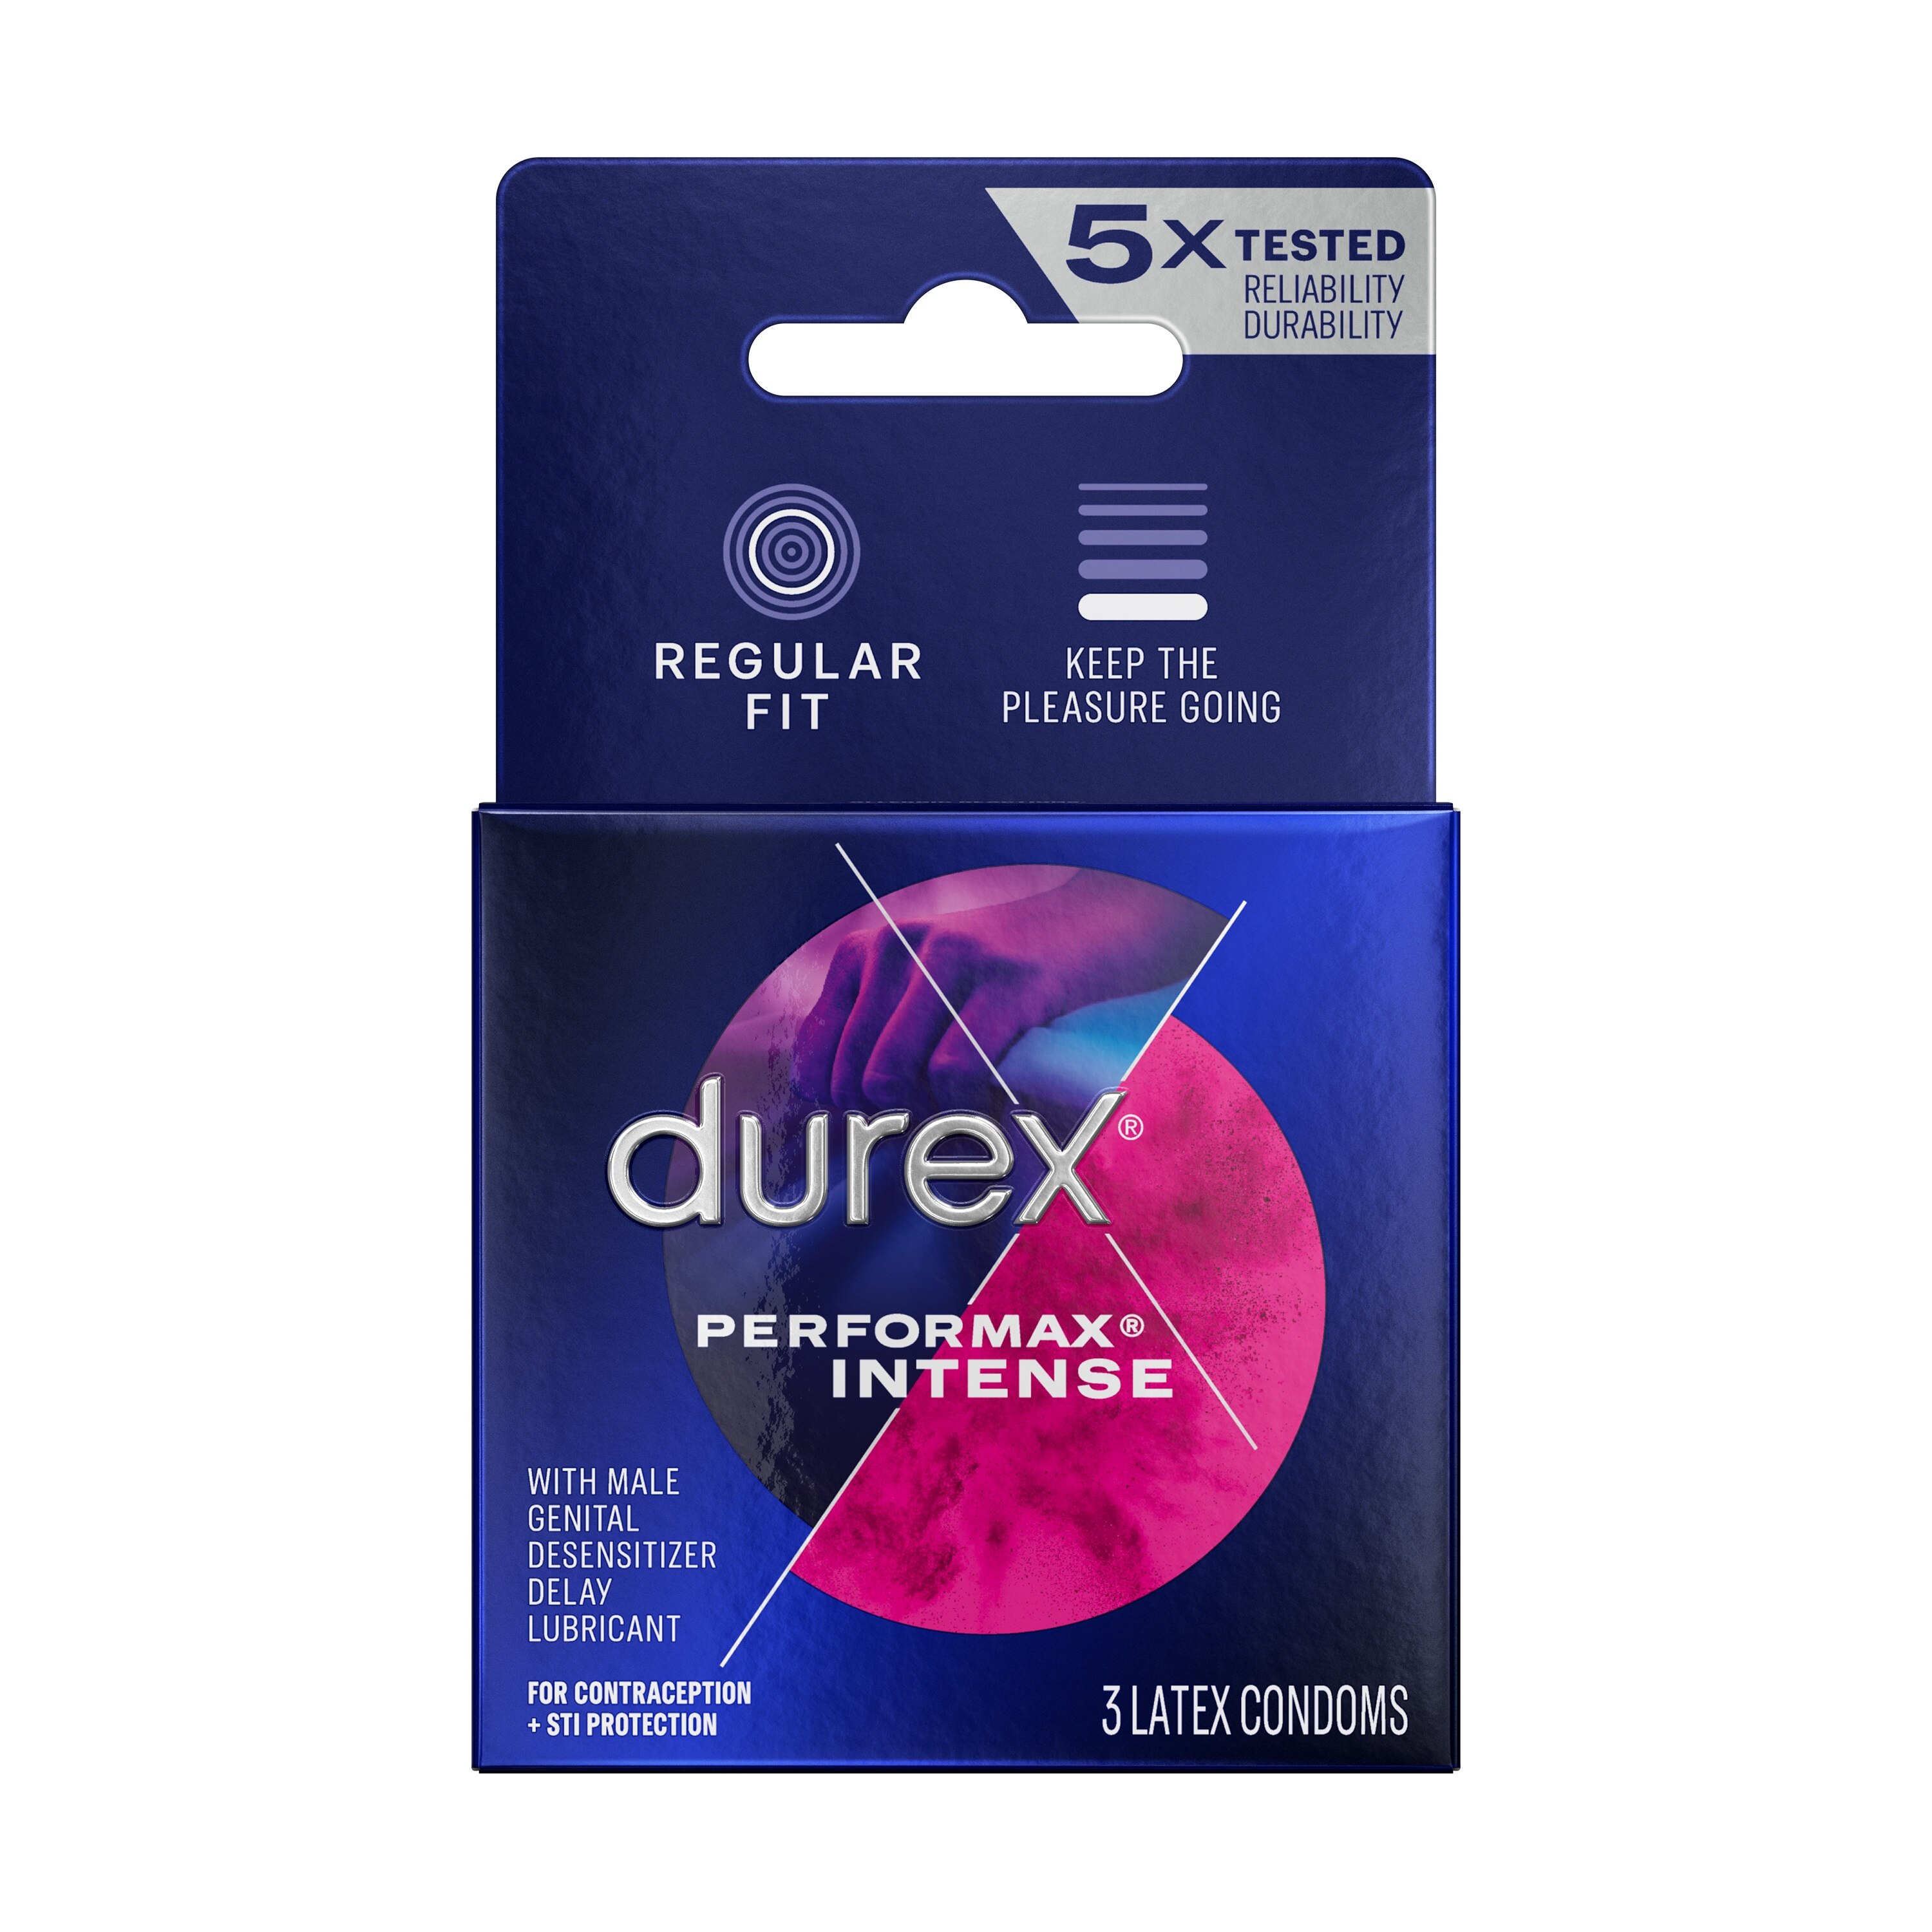 Durex Performax Intense Lubricated Ribbed Dotted Premium Condoms